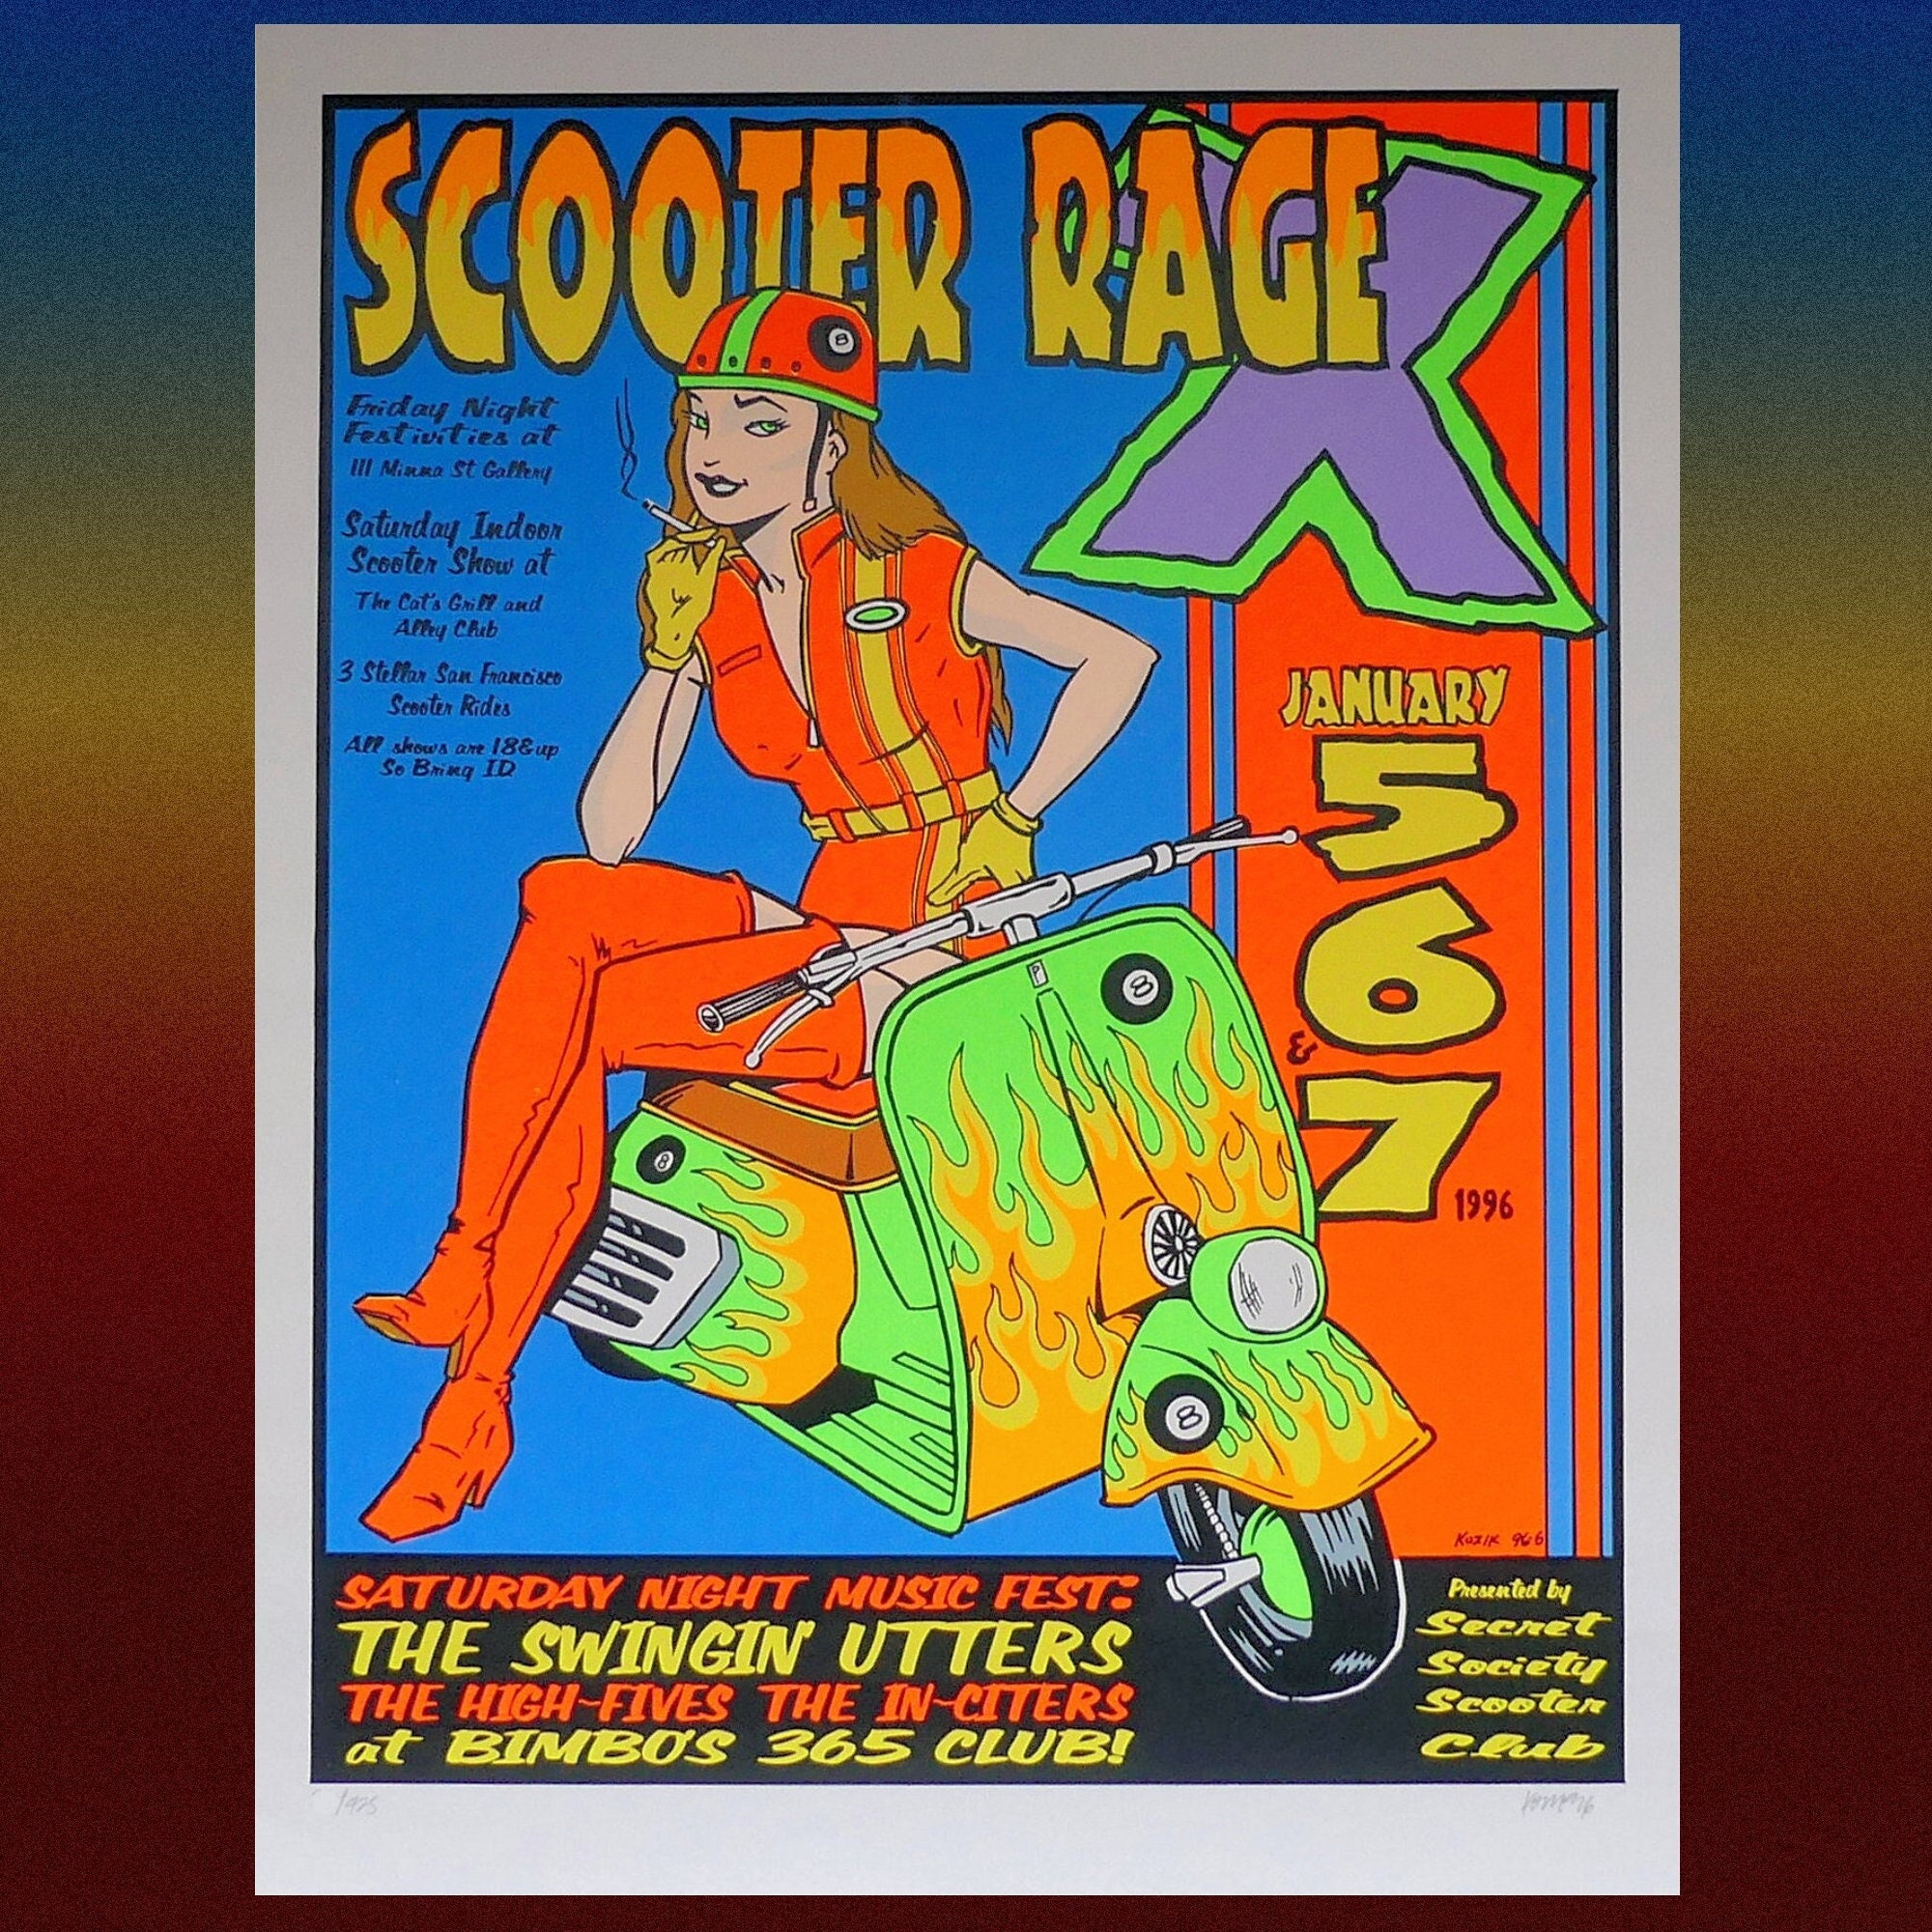 Scooter Rage X San Francisco 1996 by Frank Kozik